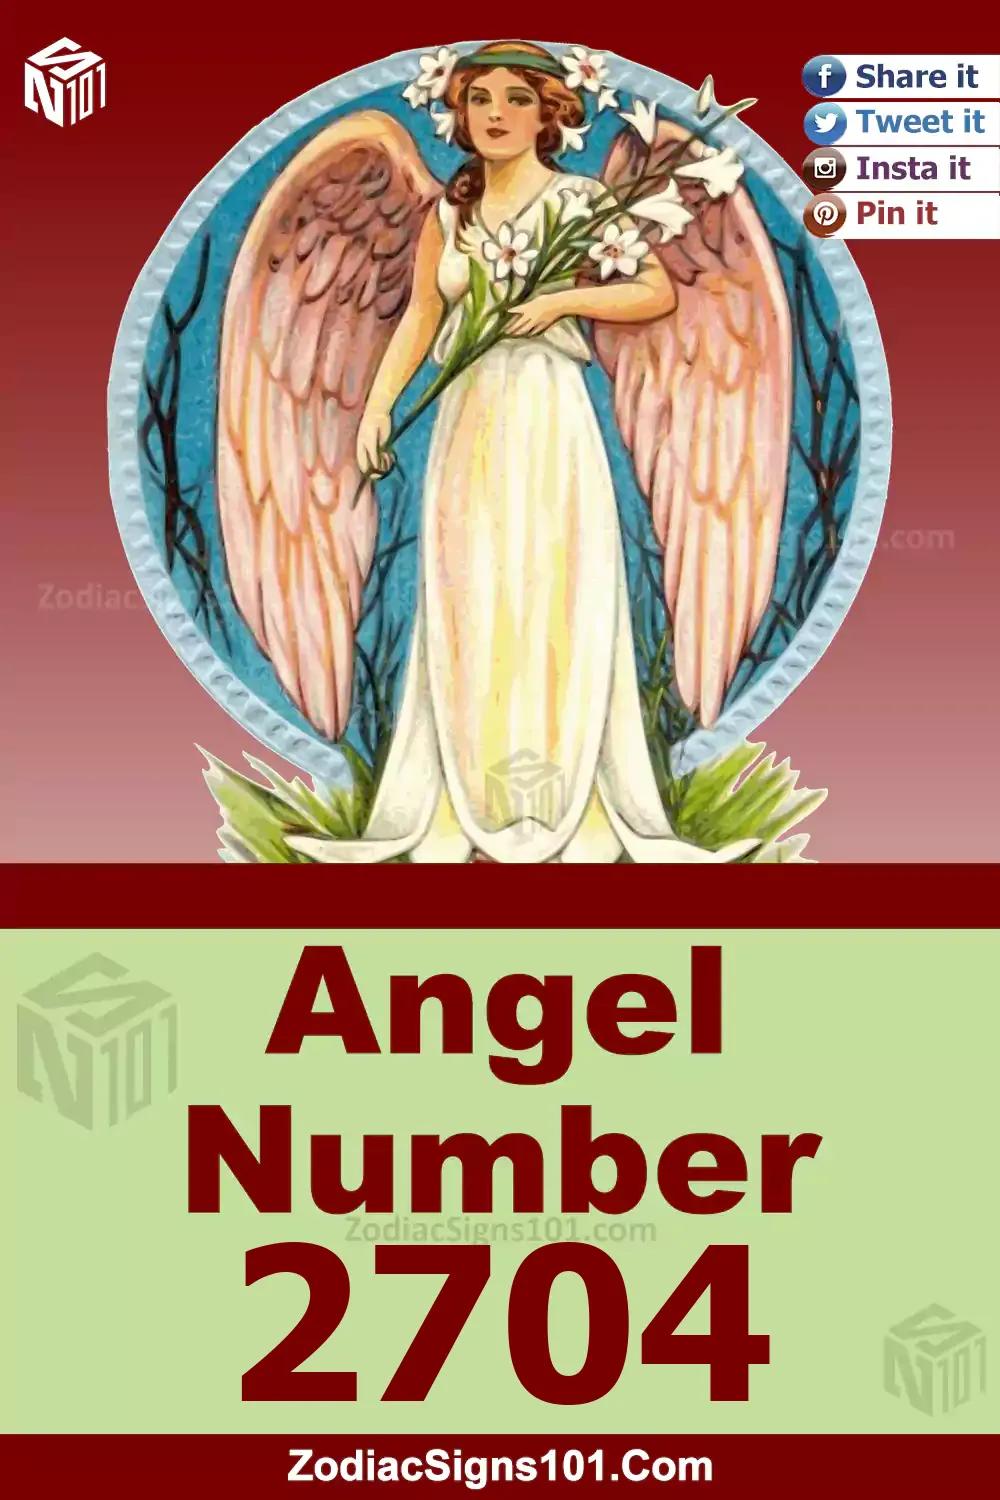 2704-Angel-Number-Meaning.jpg